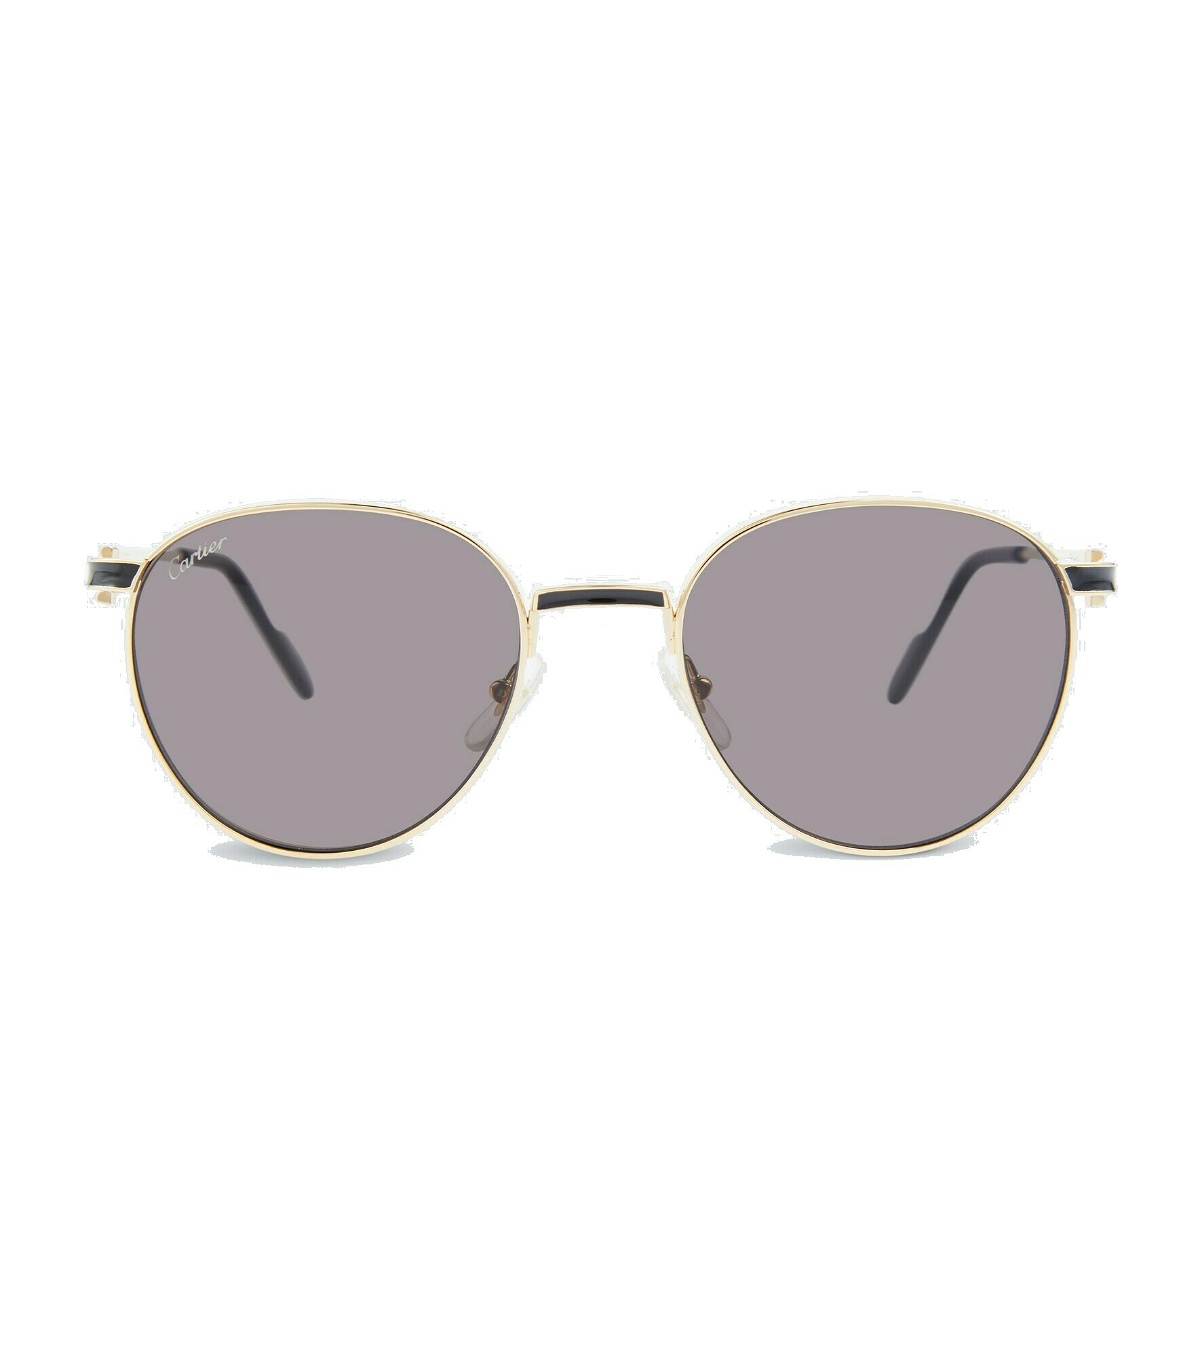 Cartier Eyewear Collection - Round sunglasses Cartier